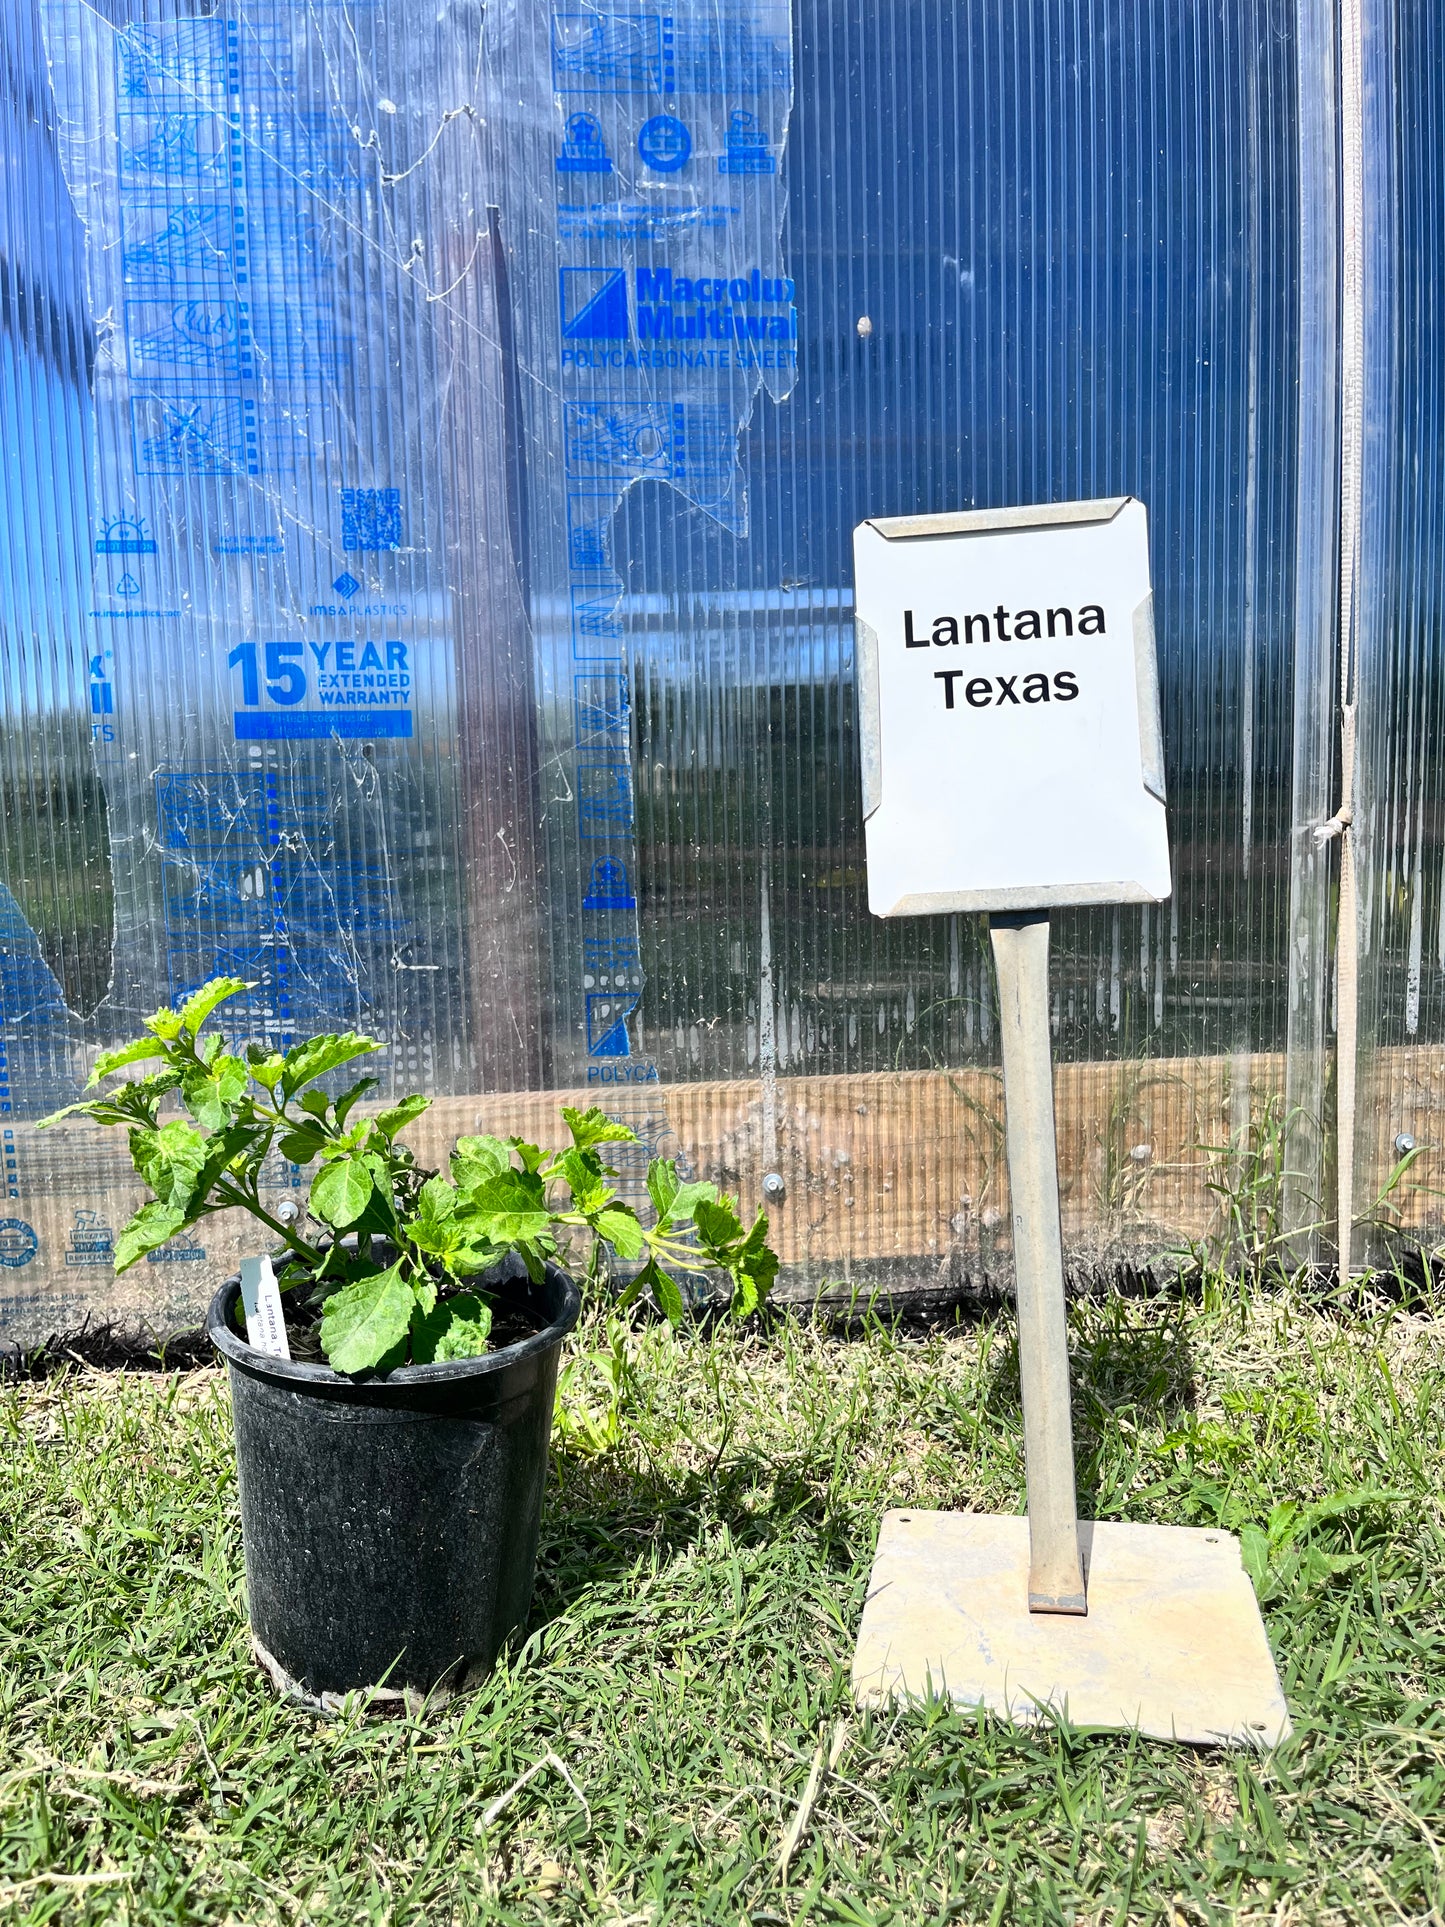 Lantana Texas